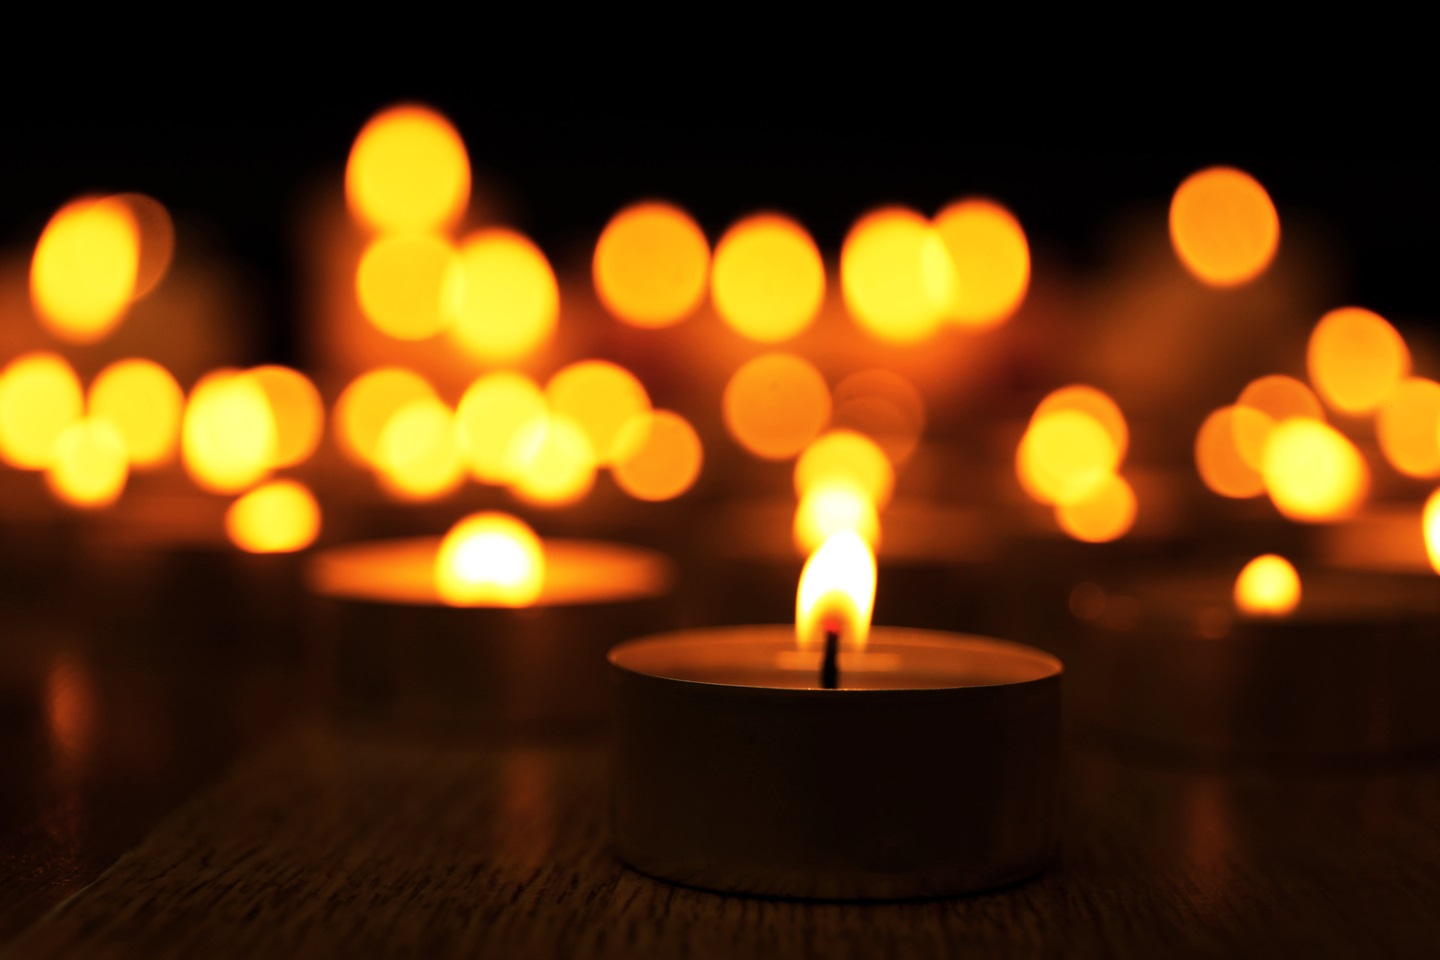 Mini candles lit in a dark background.